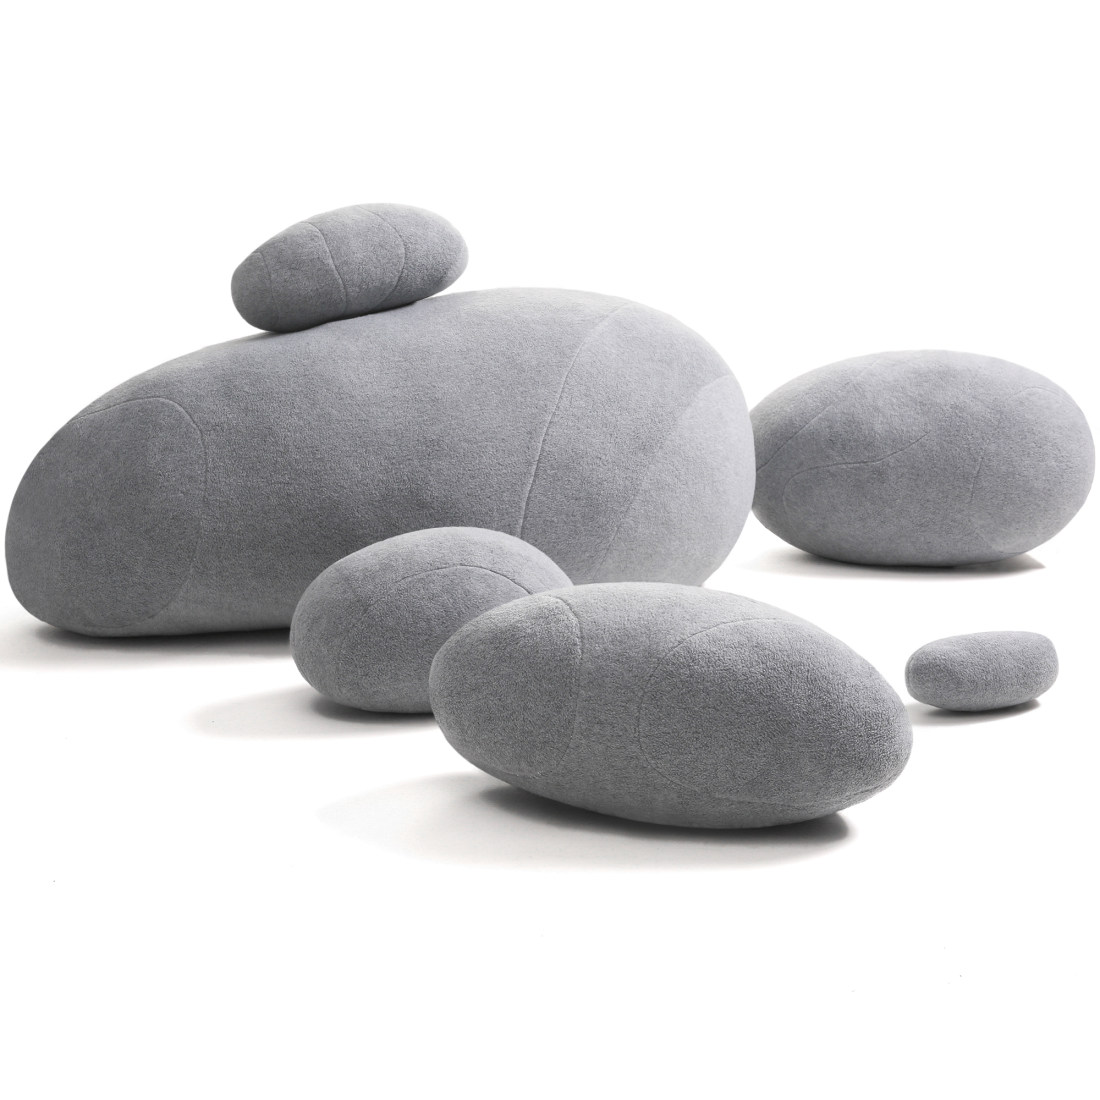 Rock Cushions Rock Pillows Stone Pillows Decorative Floor Pillows Accent  Throw Pillows Kids Room Pillows 